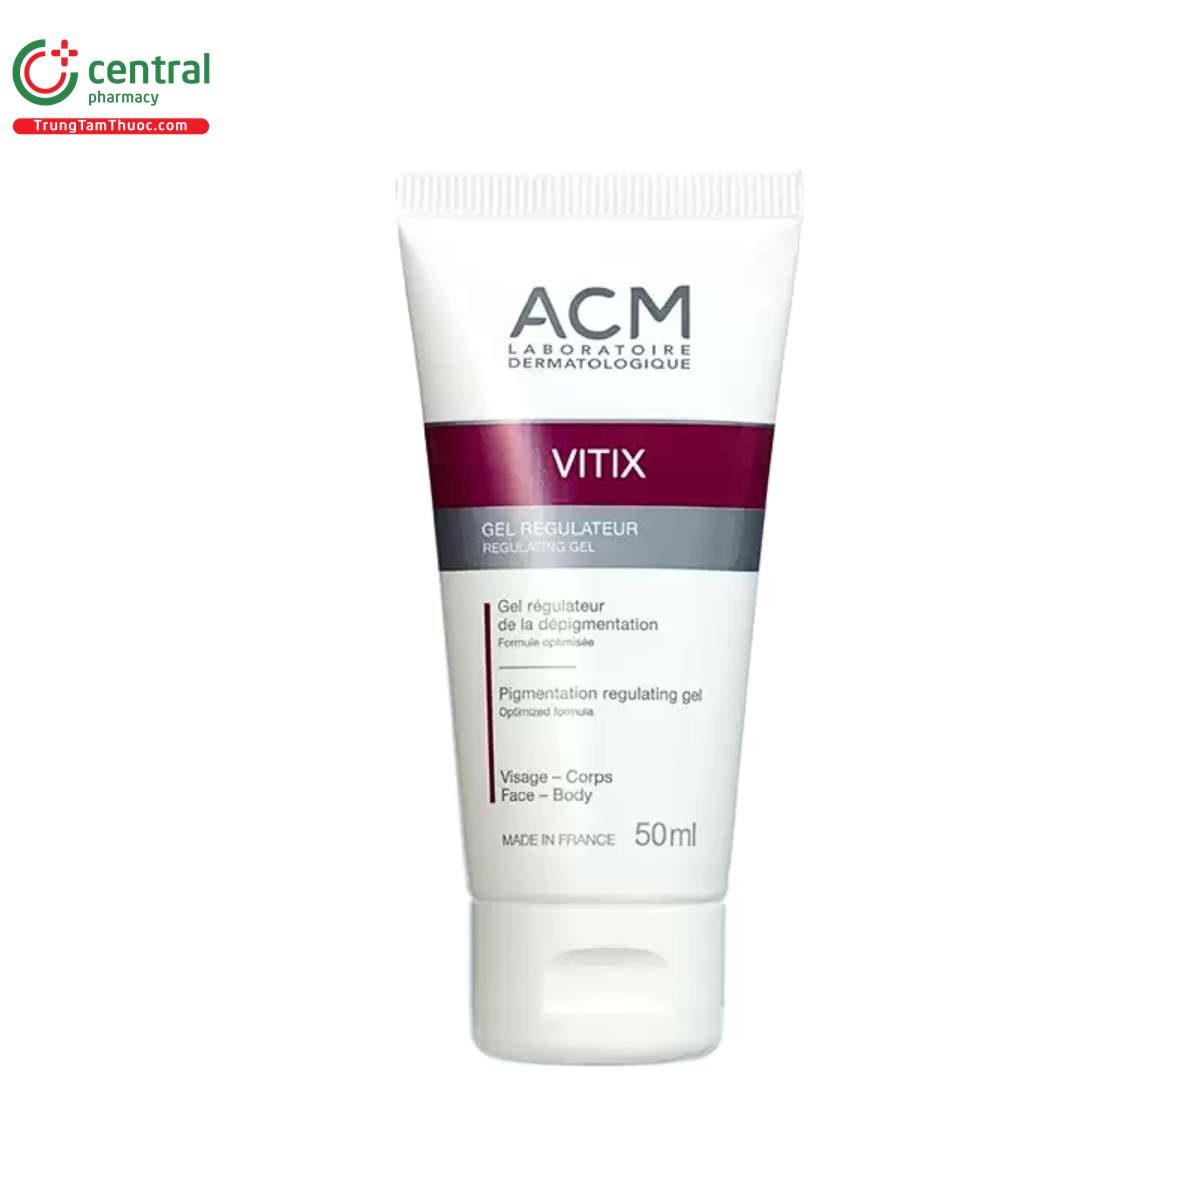 acm vitix gel regulateur 20 ml 9 C1308